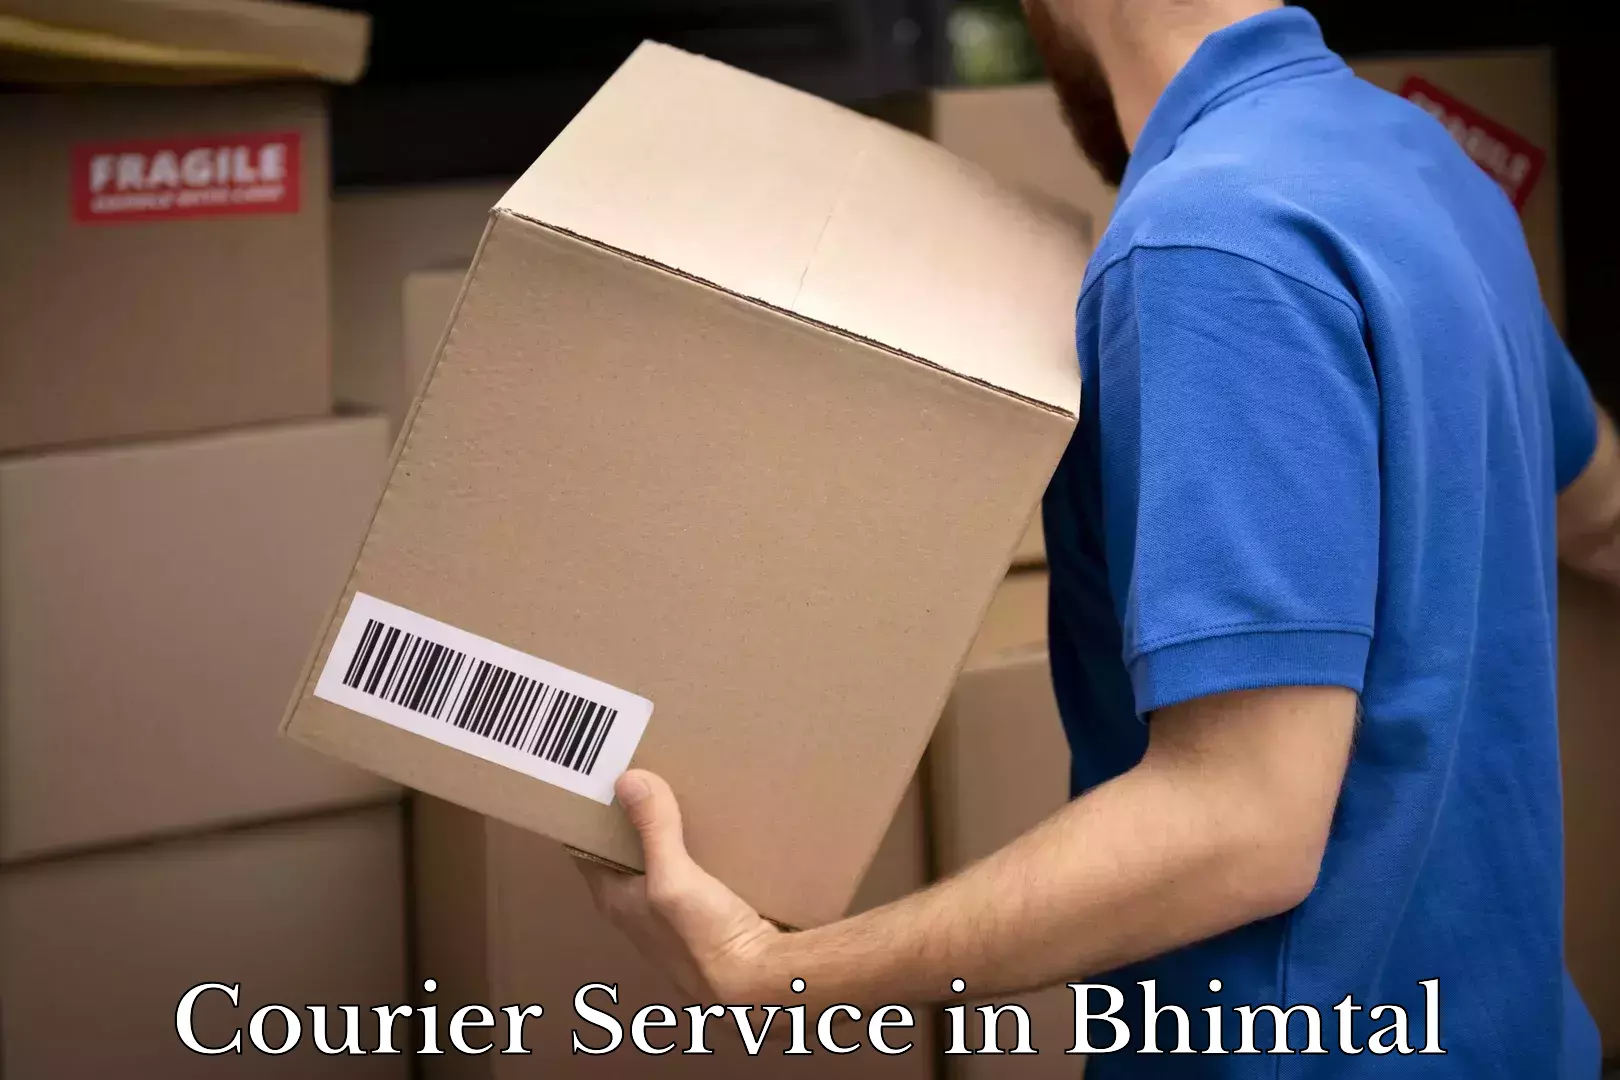 Specialized shipment handling in Bhimtal